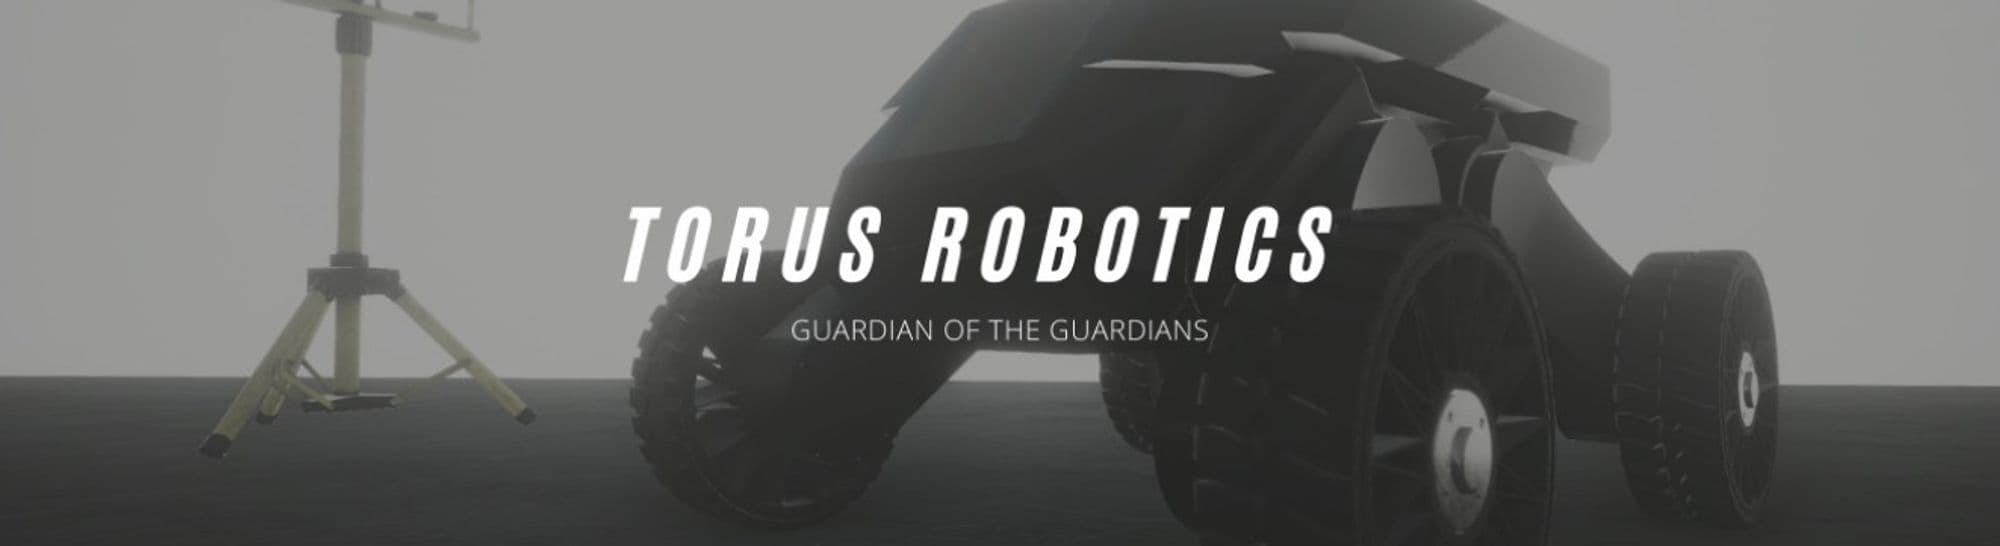 Torus Robotics Cover Image